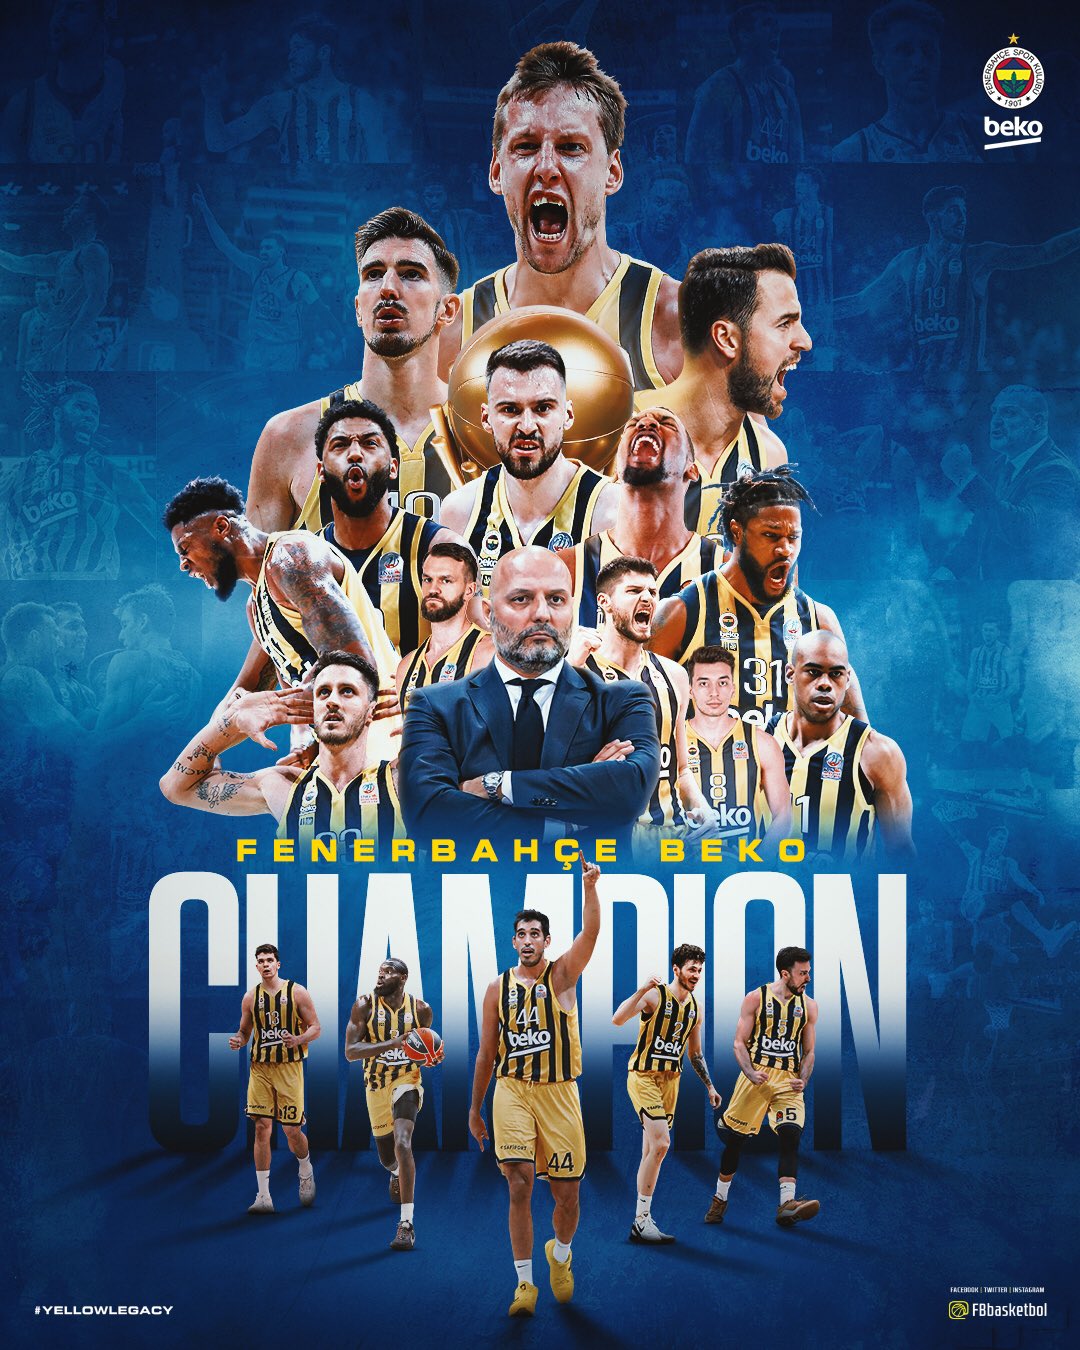 Fenerbahçe Beko on Twitter: "ŞAMPİYON FENERBAHÇE BEKO! 💛💙🏆 #YellowLegacy  https://t.co/BTn8Y8ADNB" / Twitter